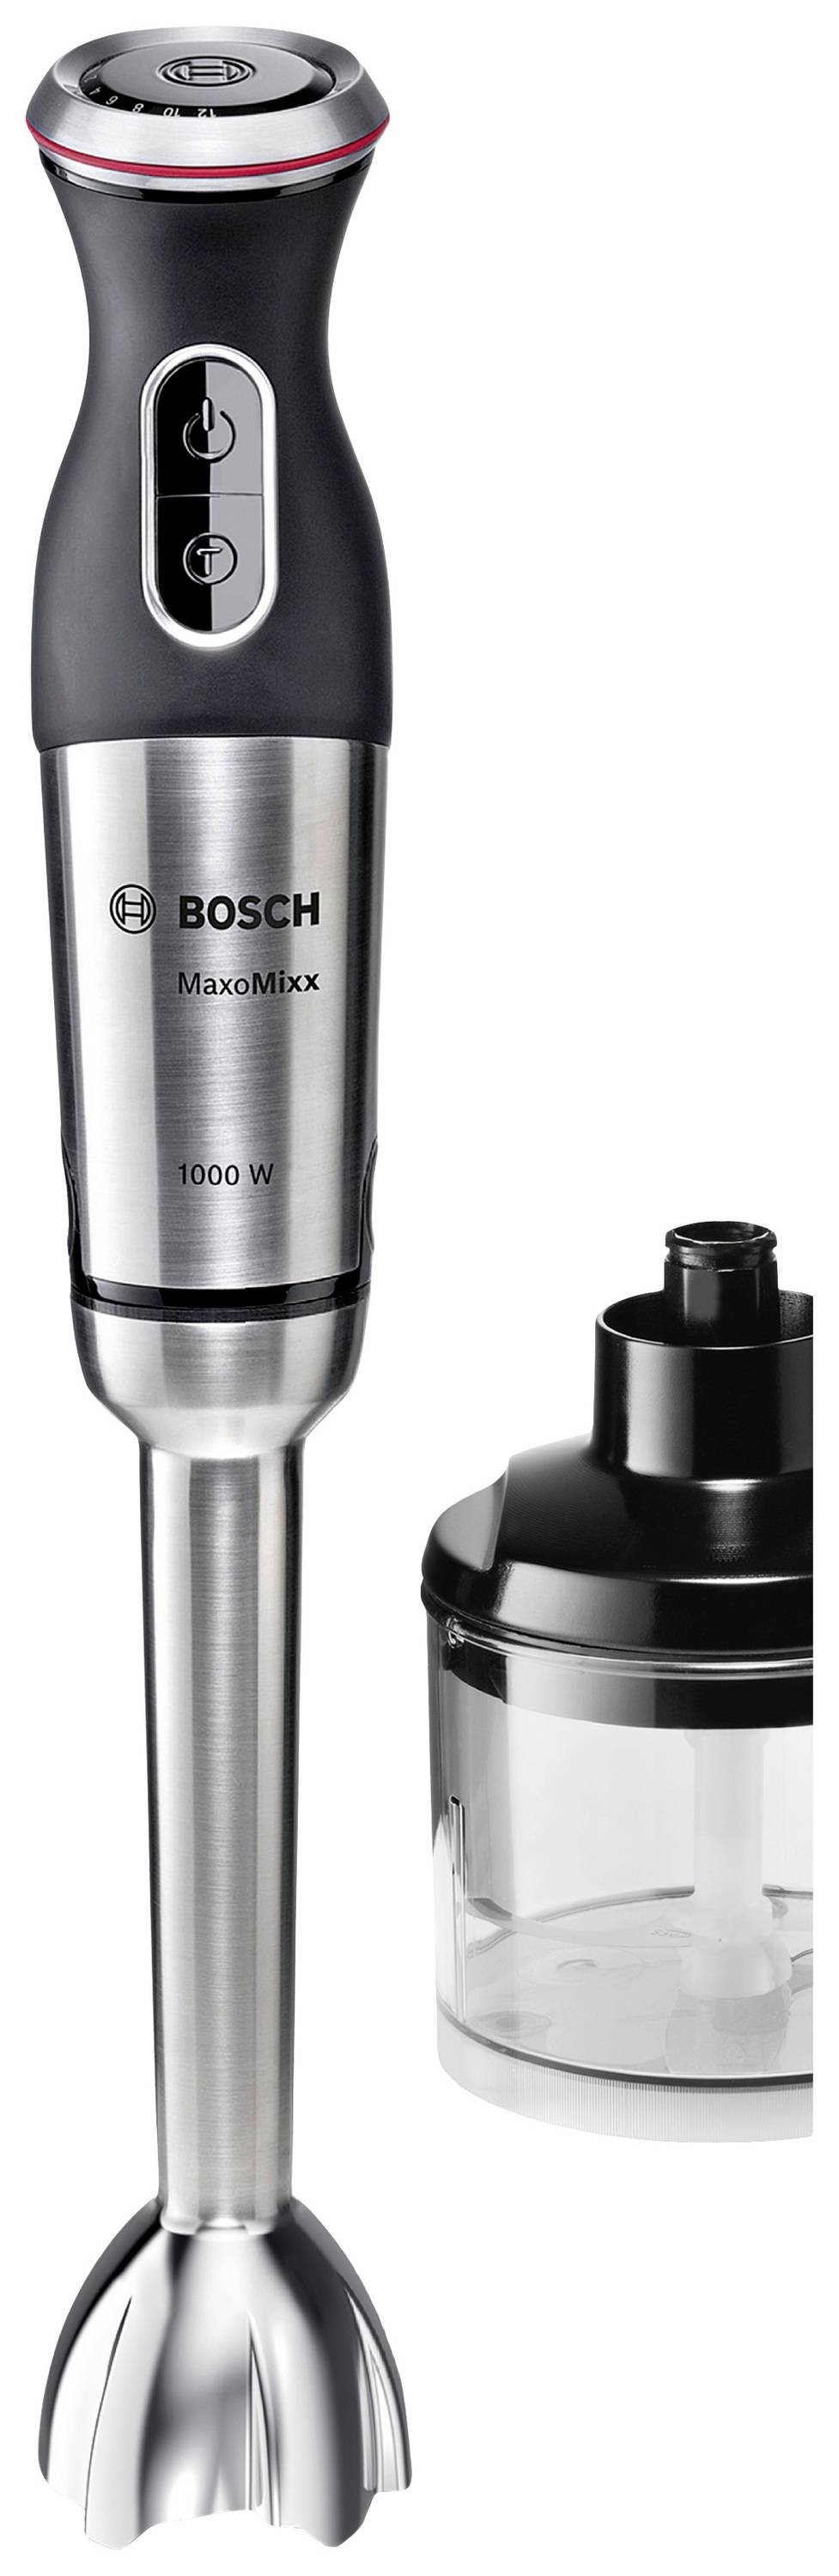 Bosch Haushalt MS8CM6120 Hand-held blender W with blender attachment steel, Black Conrad.com